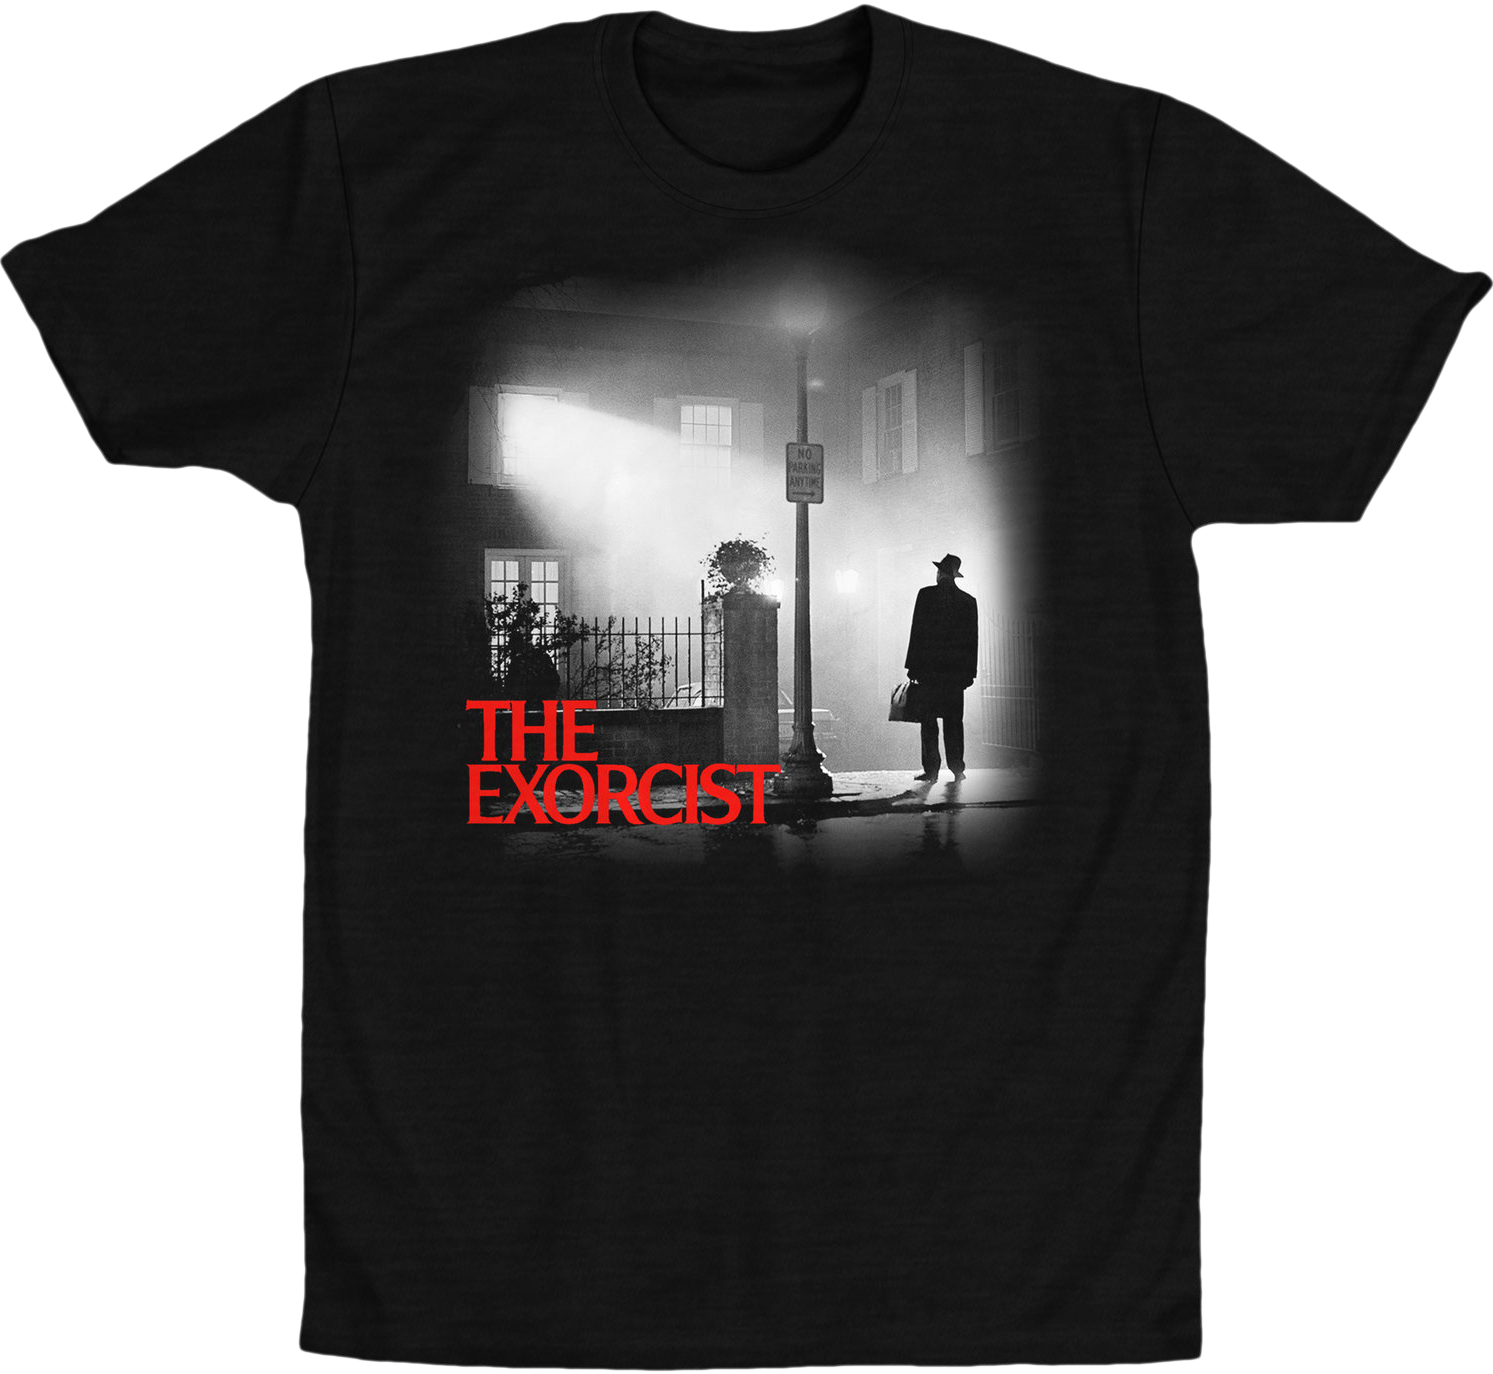 Exorcist Poster T-Shirt